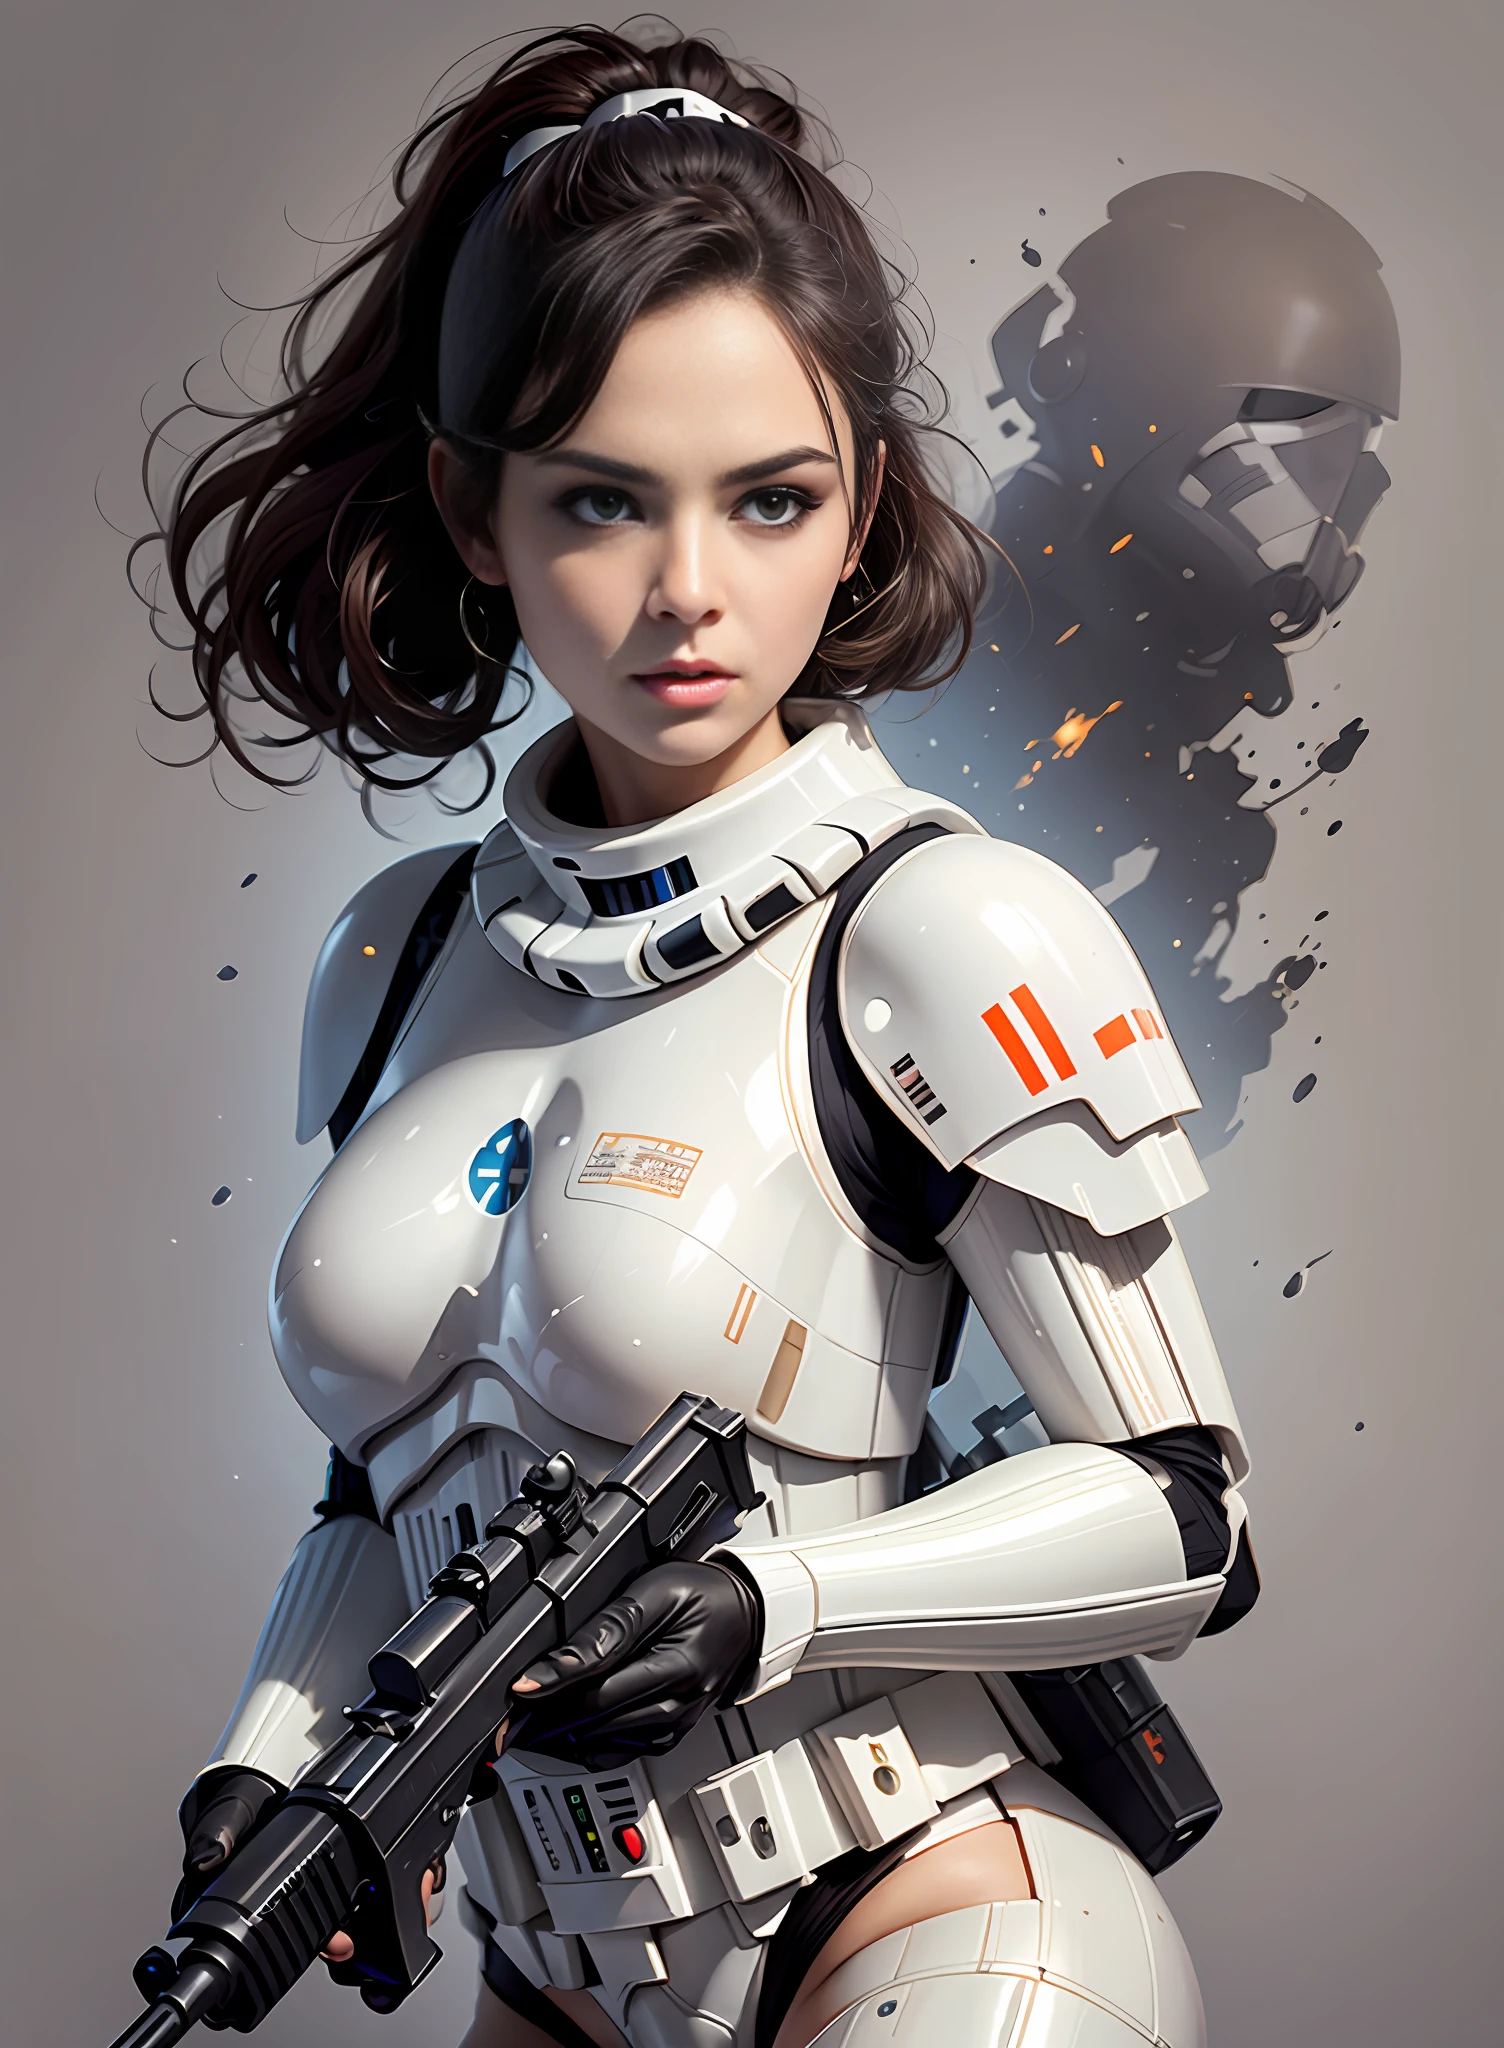 mulher stormtrooper com arma